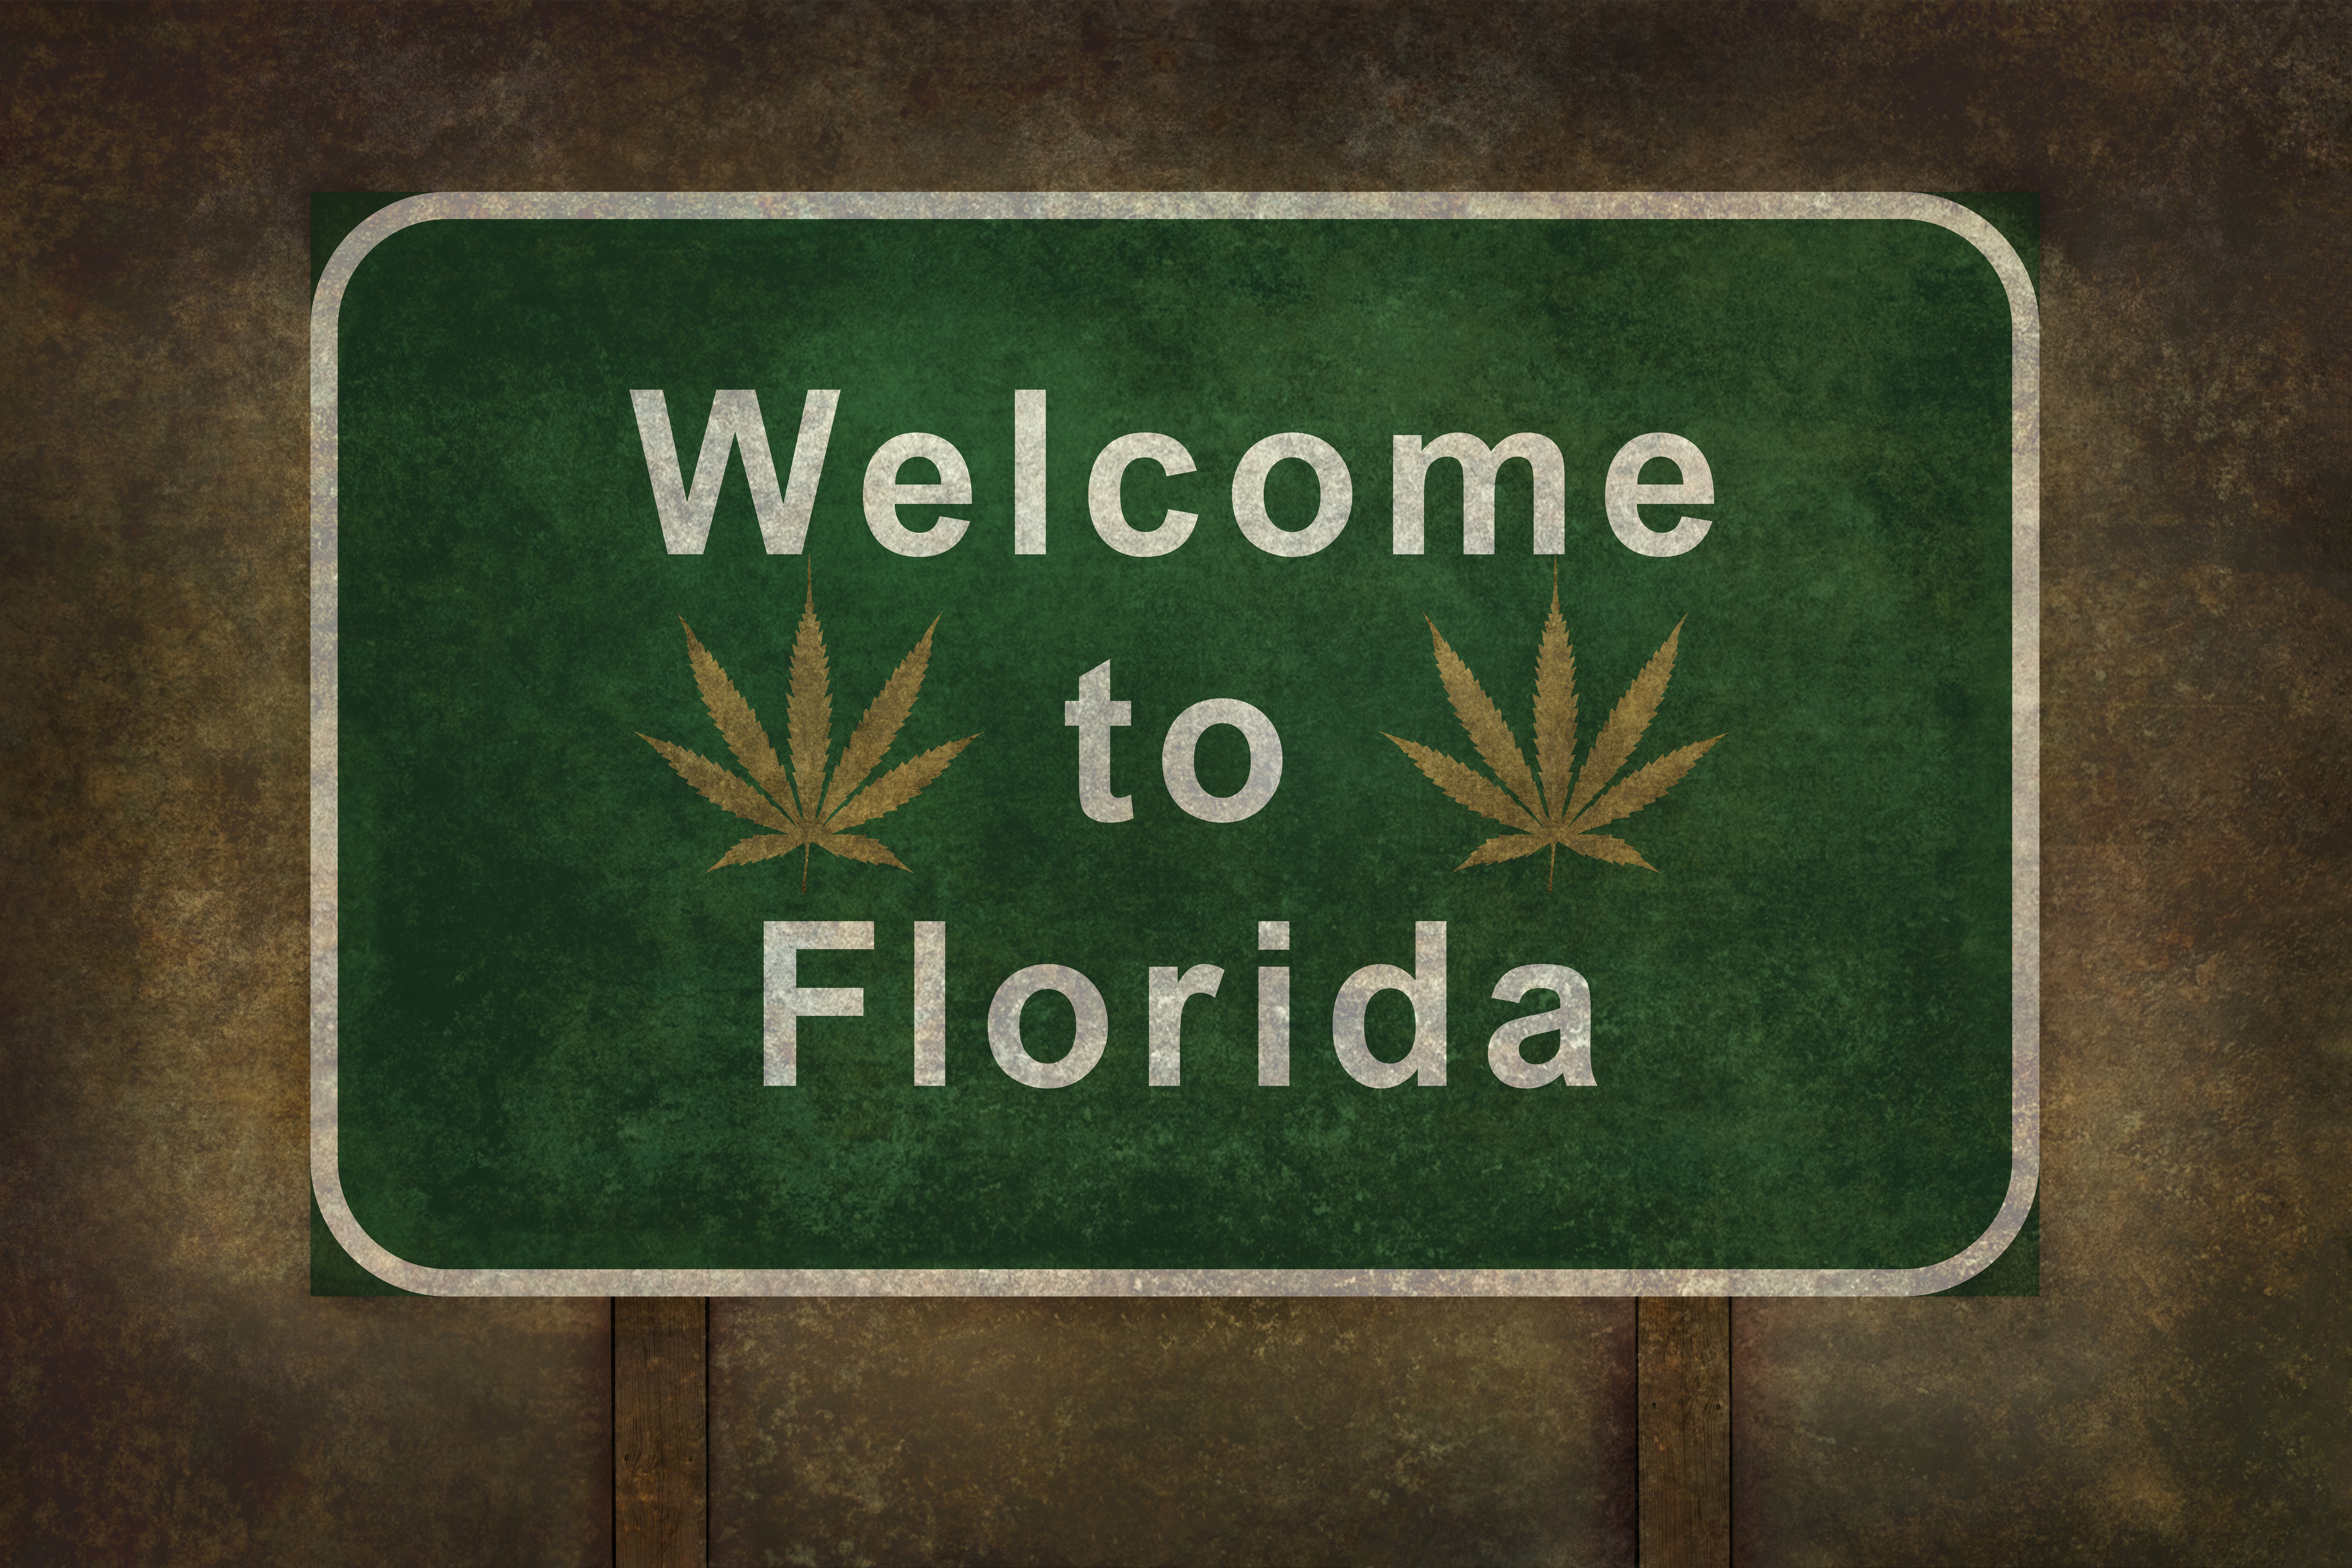 Florida to Vote on Cannabis